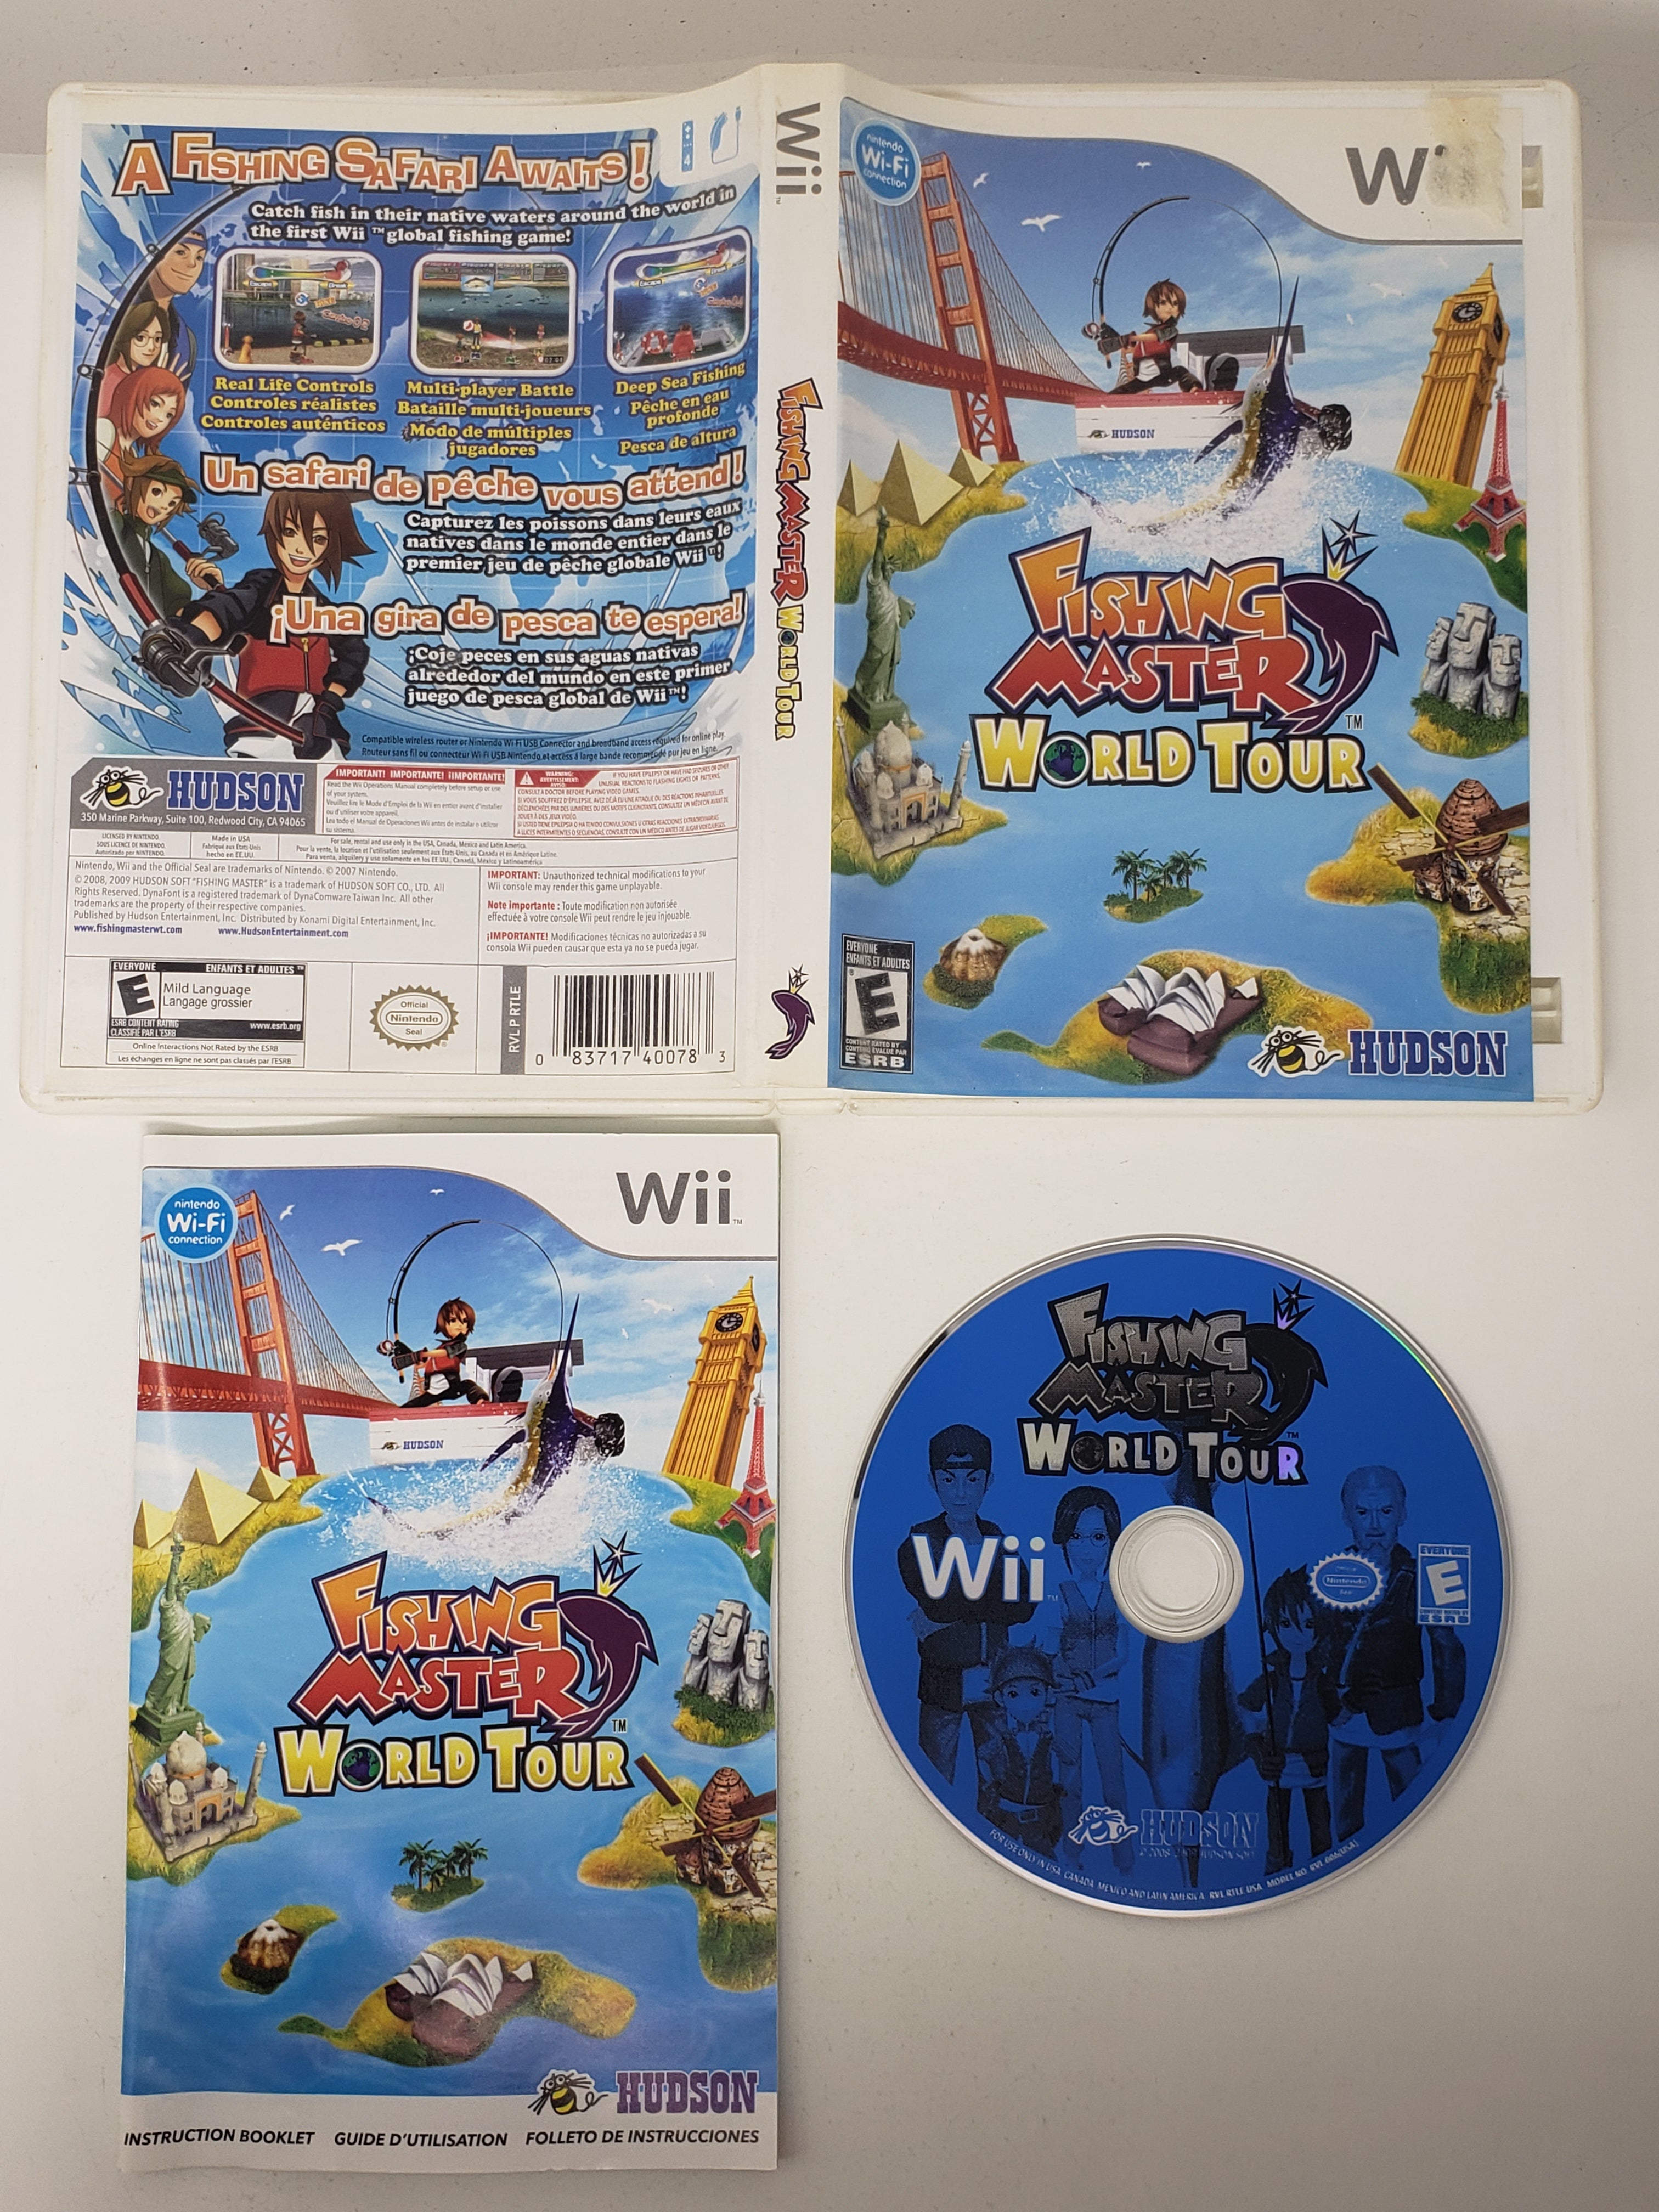 Fishing Master World Tour - Nintendo Wii